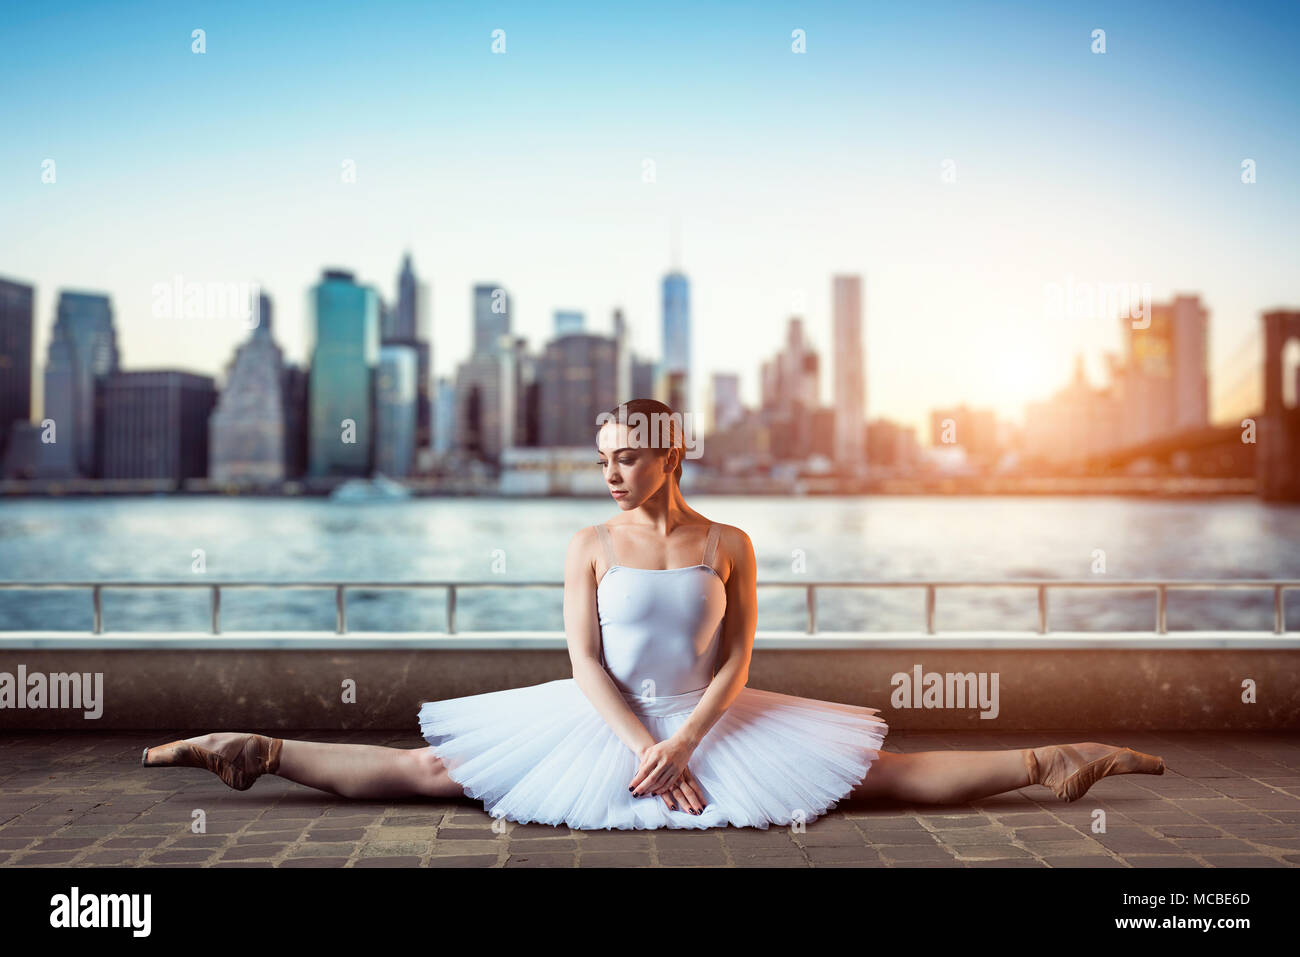 Body flexibility of classical ballet dancer Stock Photo